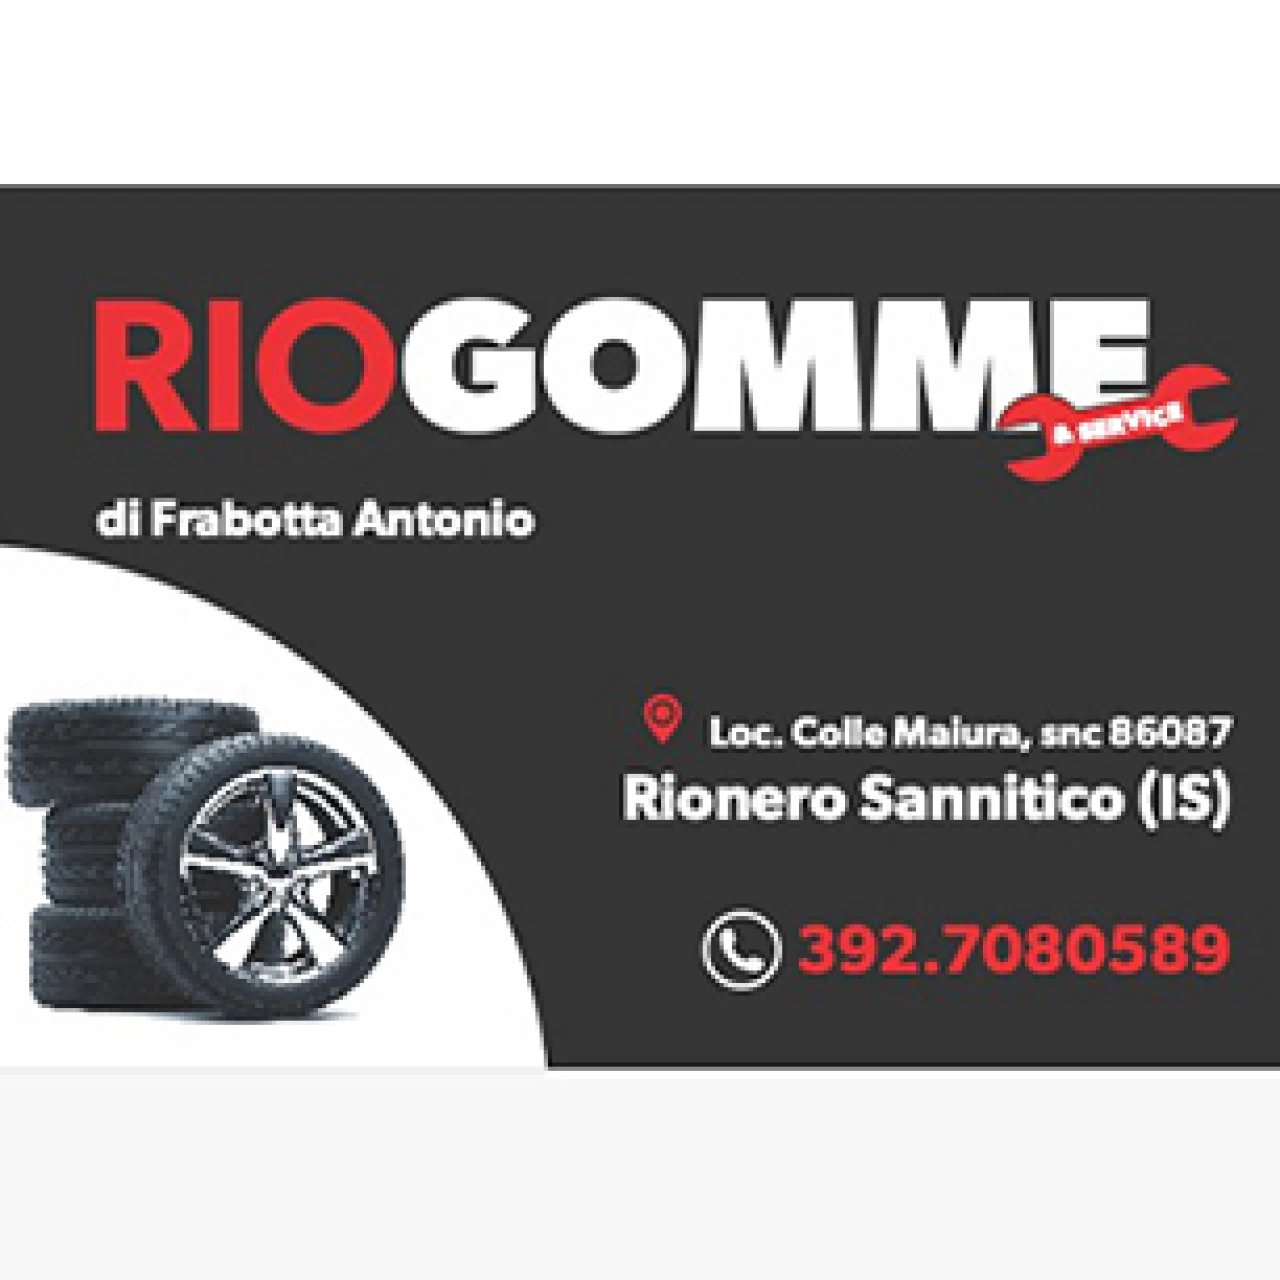 Banner Rio Gomme 306 per 306 pixel